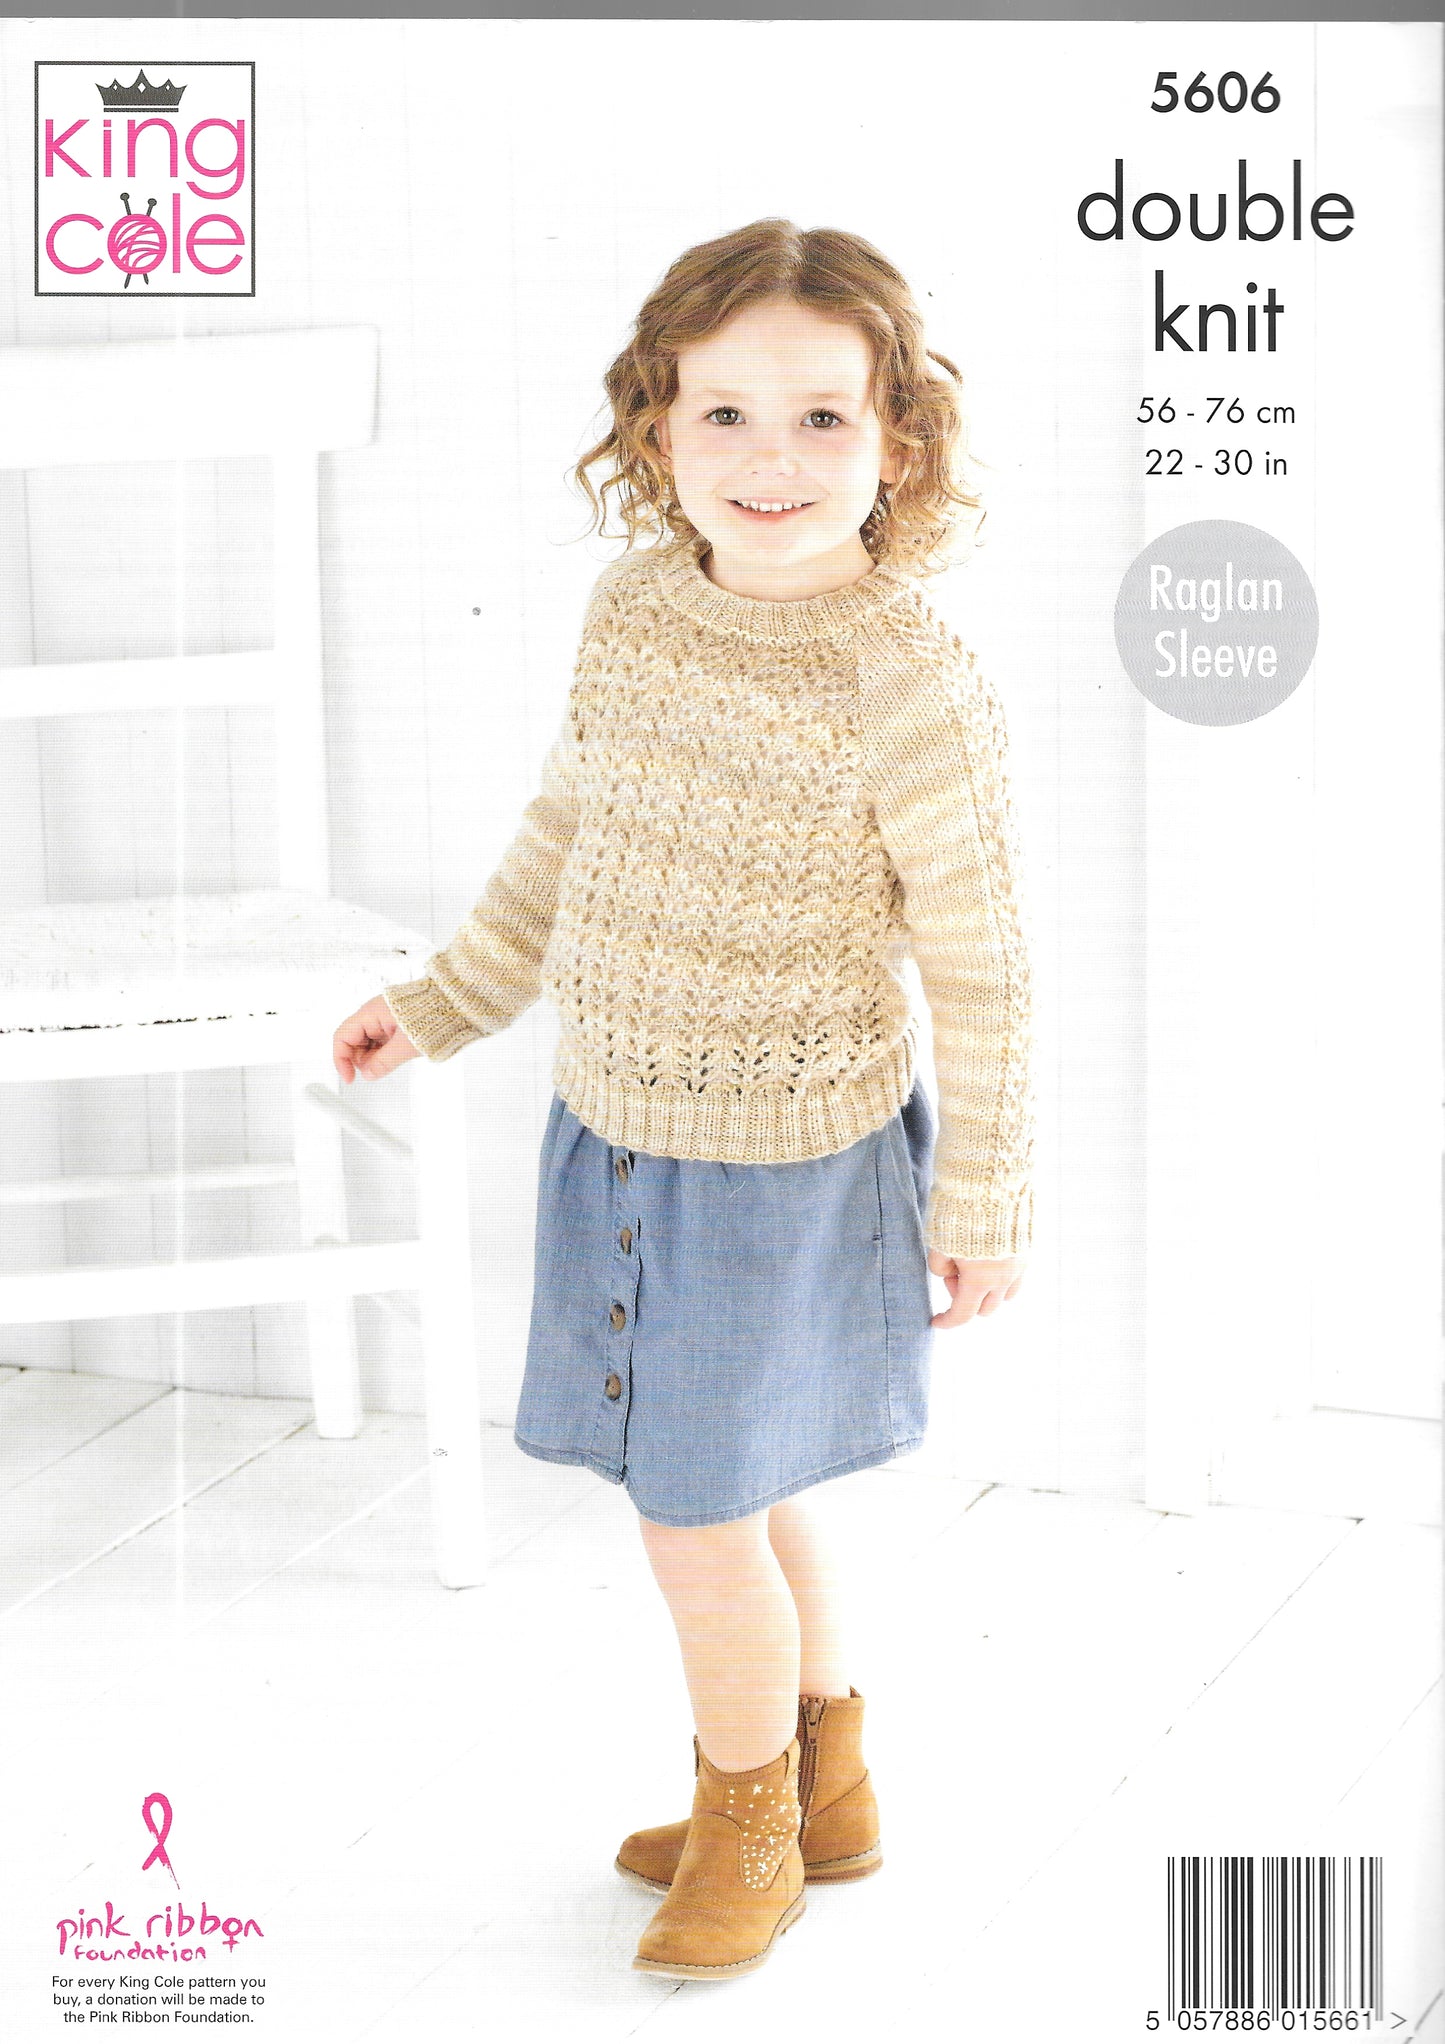 5606 King Cole Double Knit Sweater/Cardigan knitting pattern